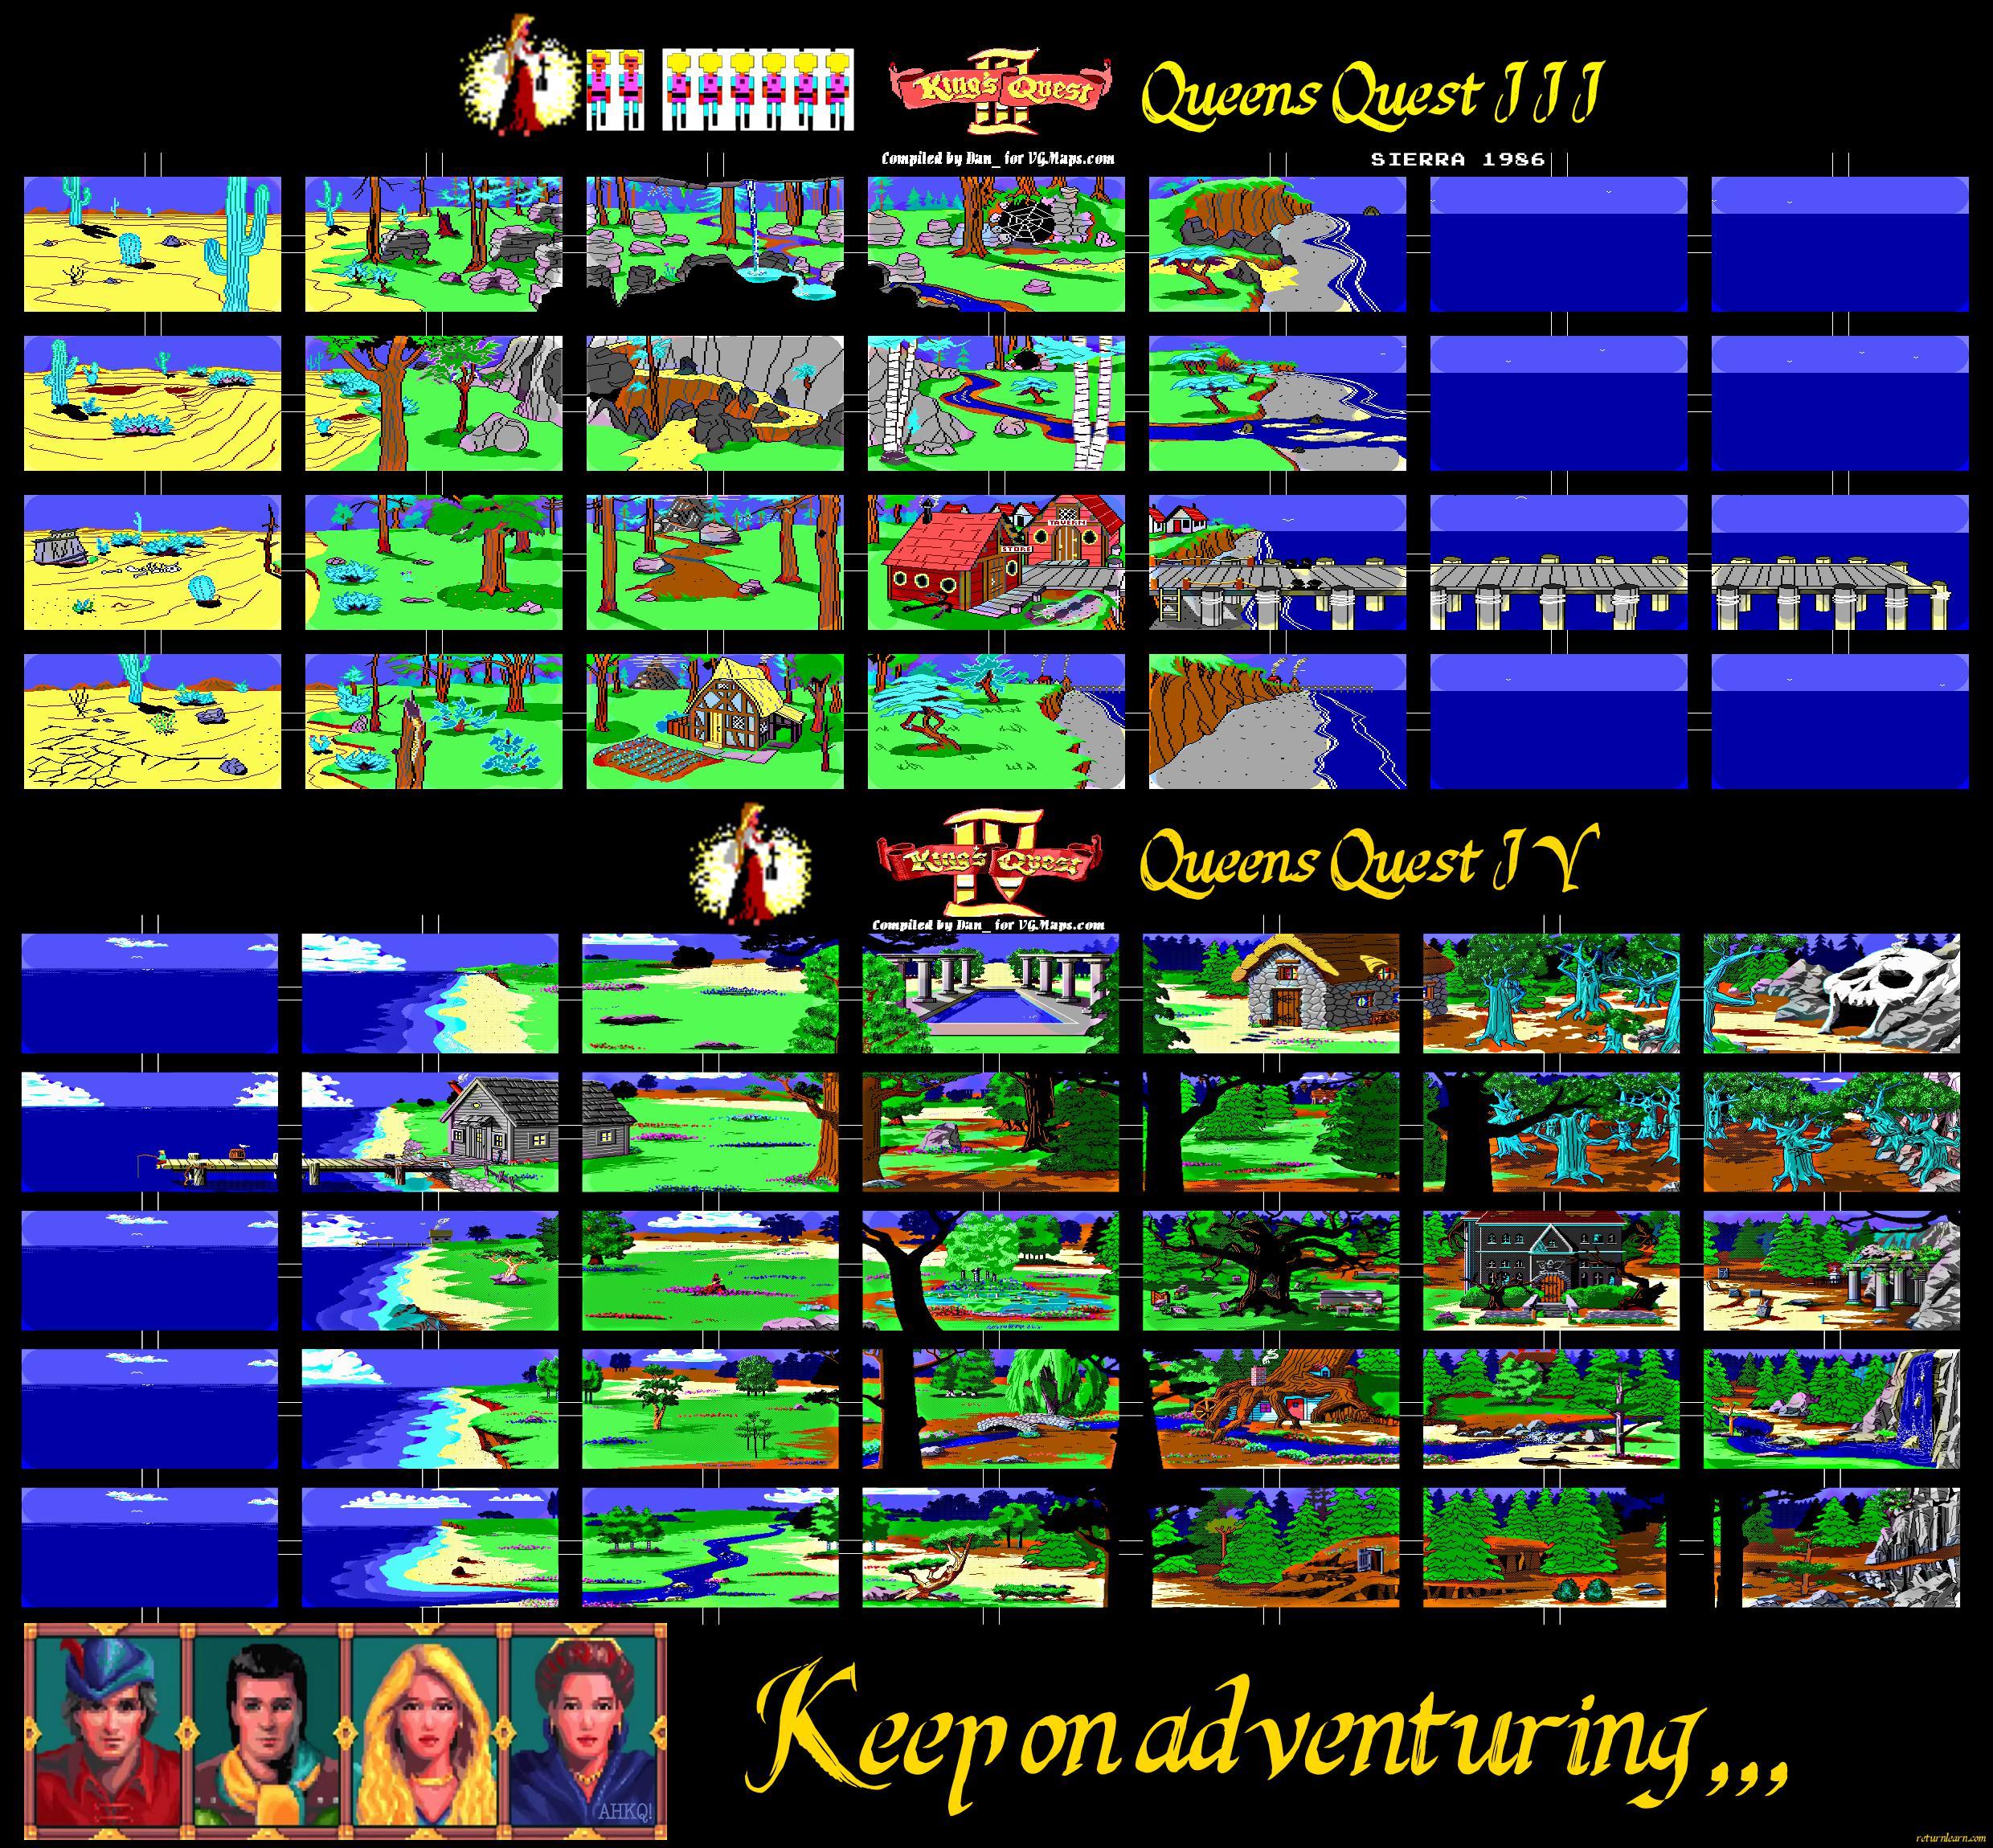 Quest 3 games. Queen of Quest. Queen's Quest 3. Kings Queens игра. Quest 3 Дата выхода.